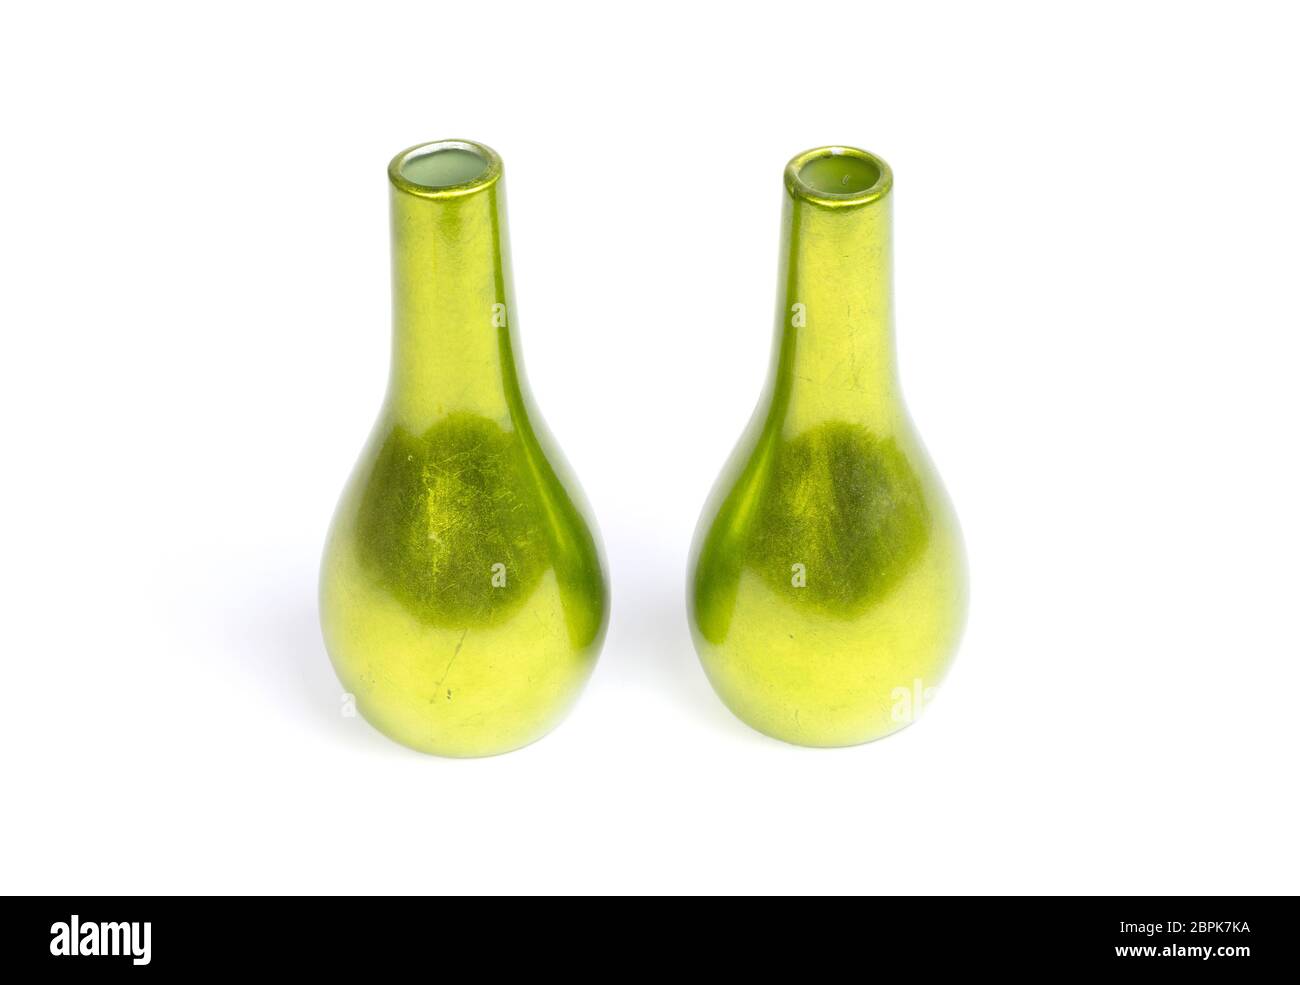 https://c8.alamy.com/comp/2BPK7KA/green-vases-isolated-on-a-white-background-2BPK7KA.jpg